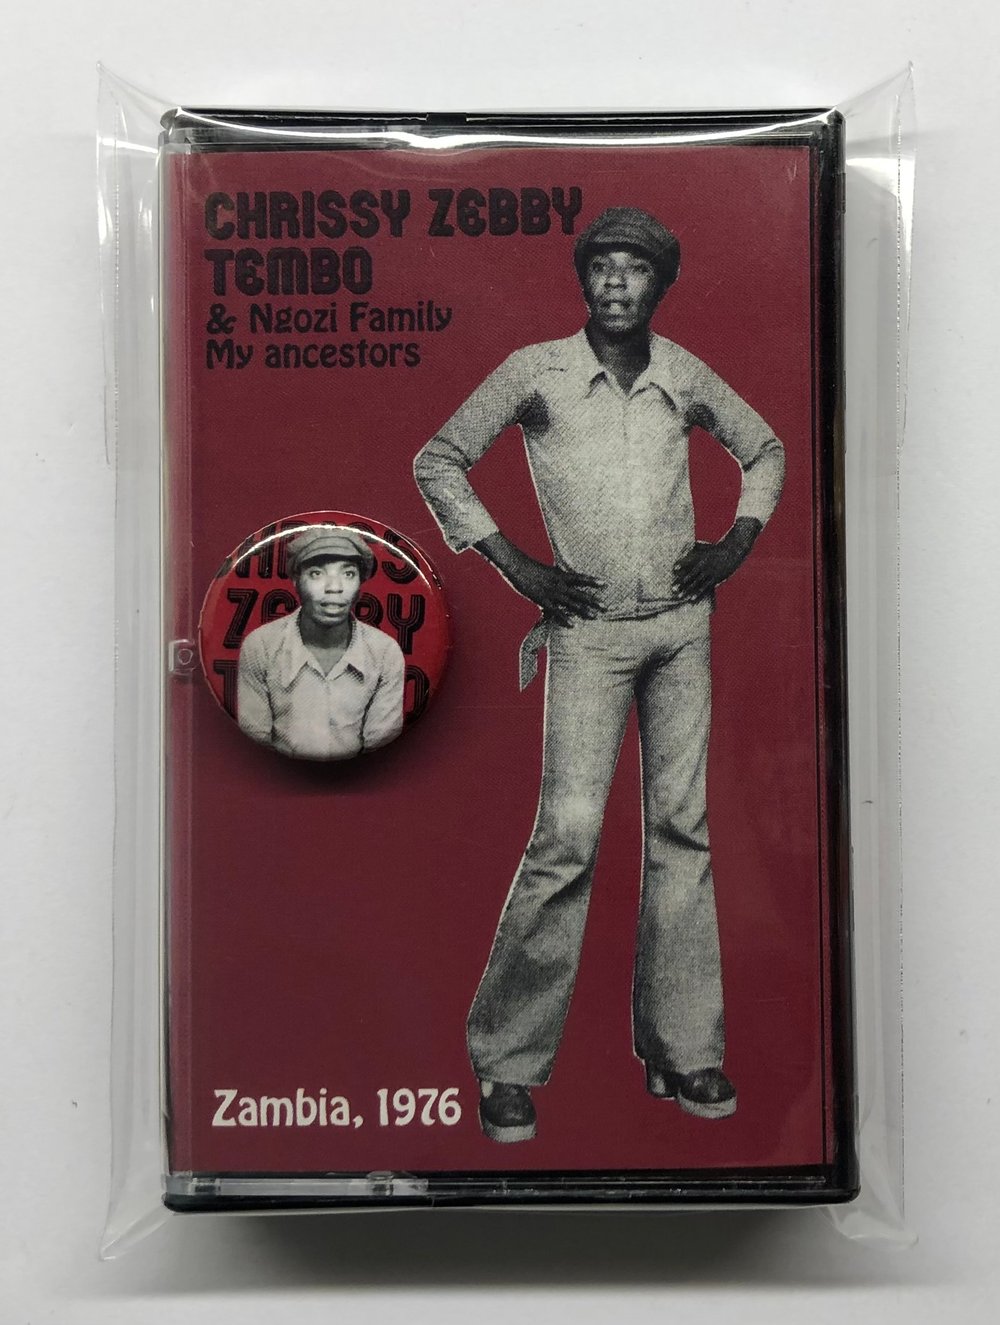 Chrissy Zebby Tembo LRR-007